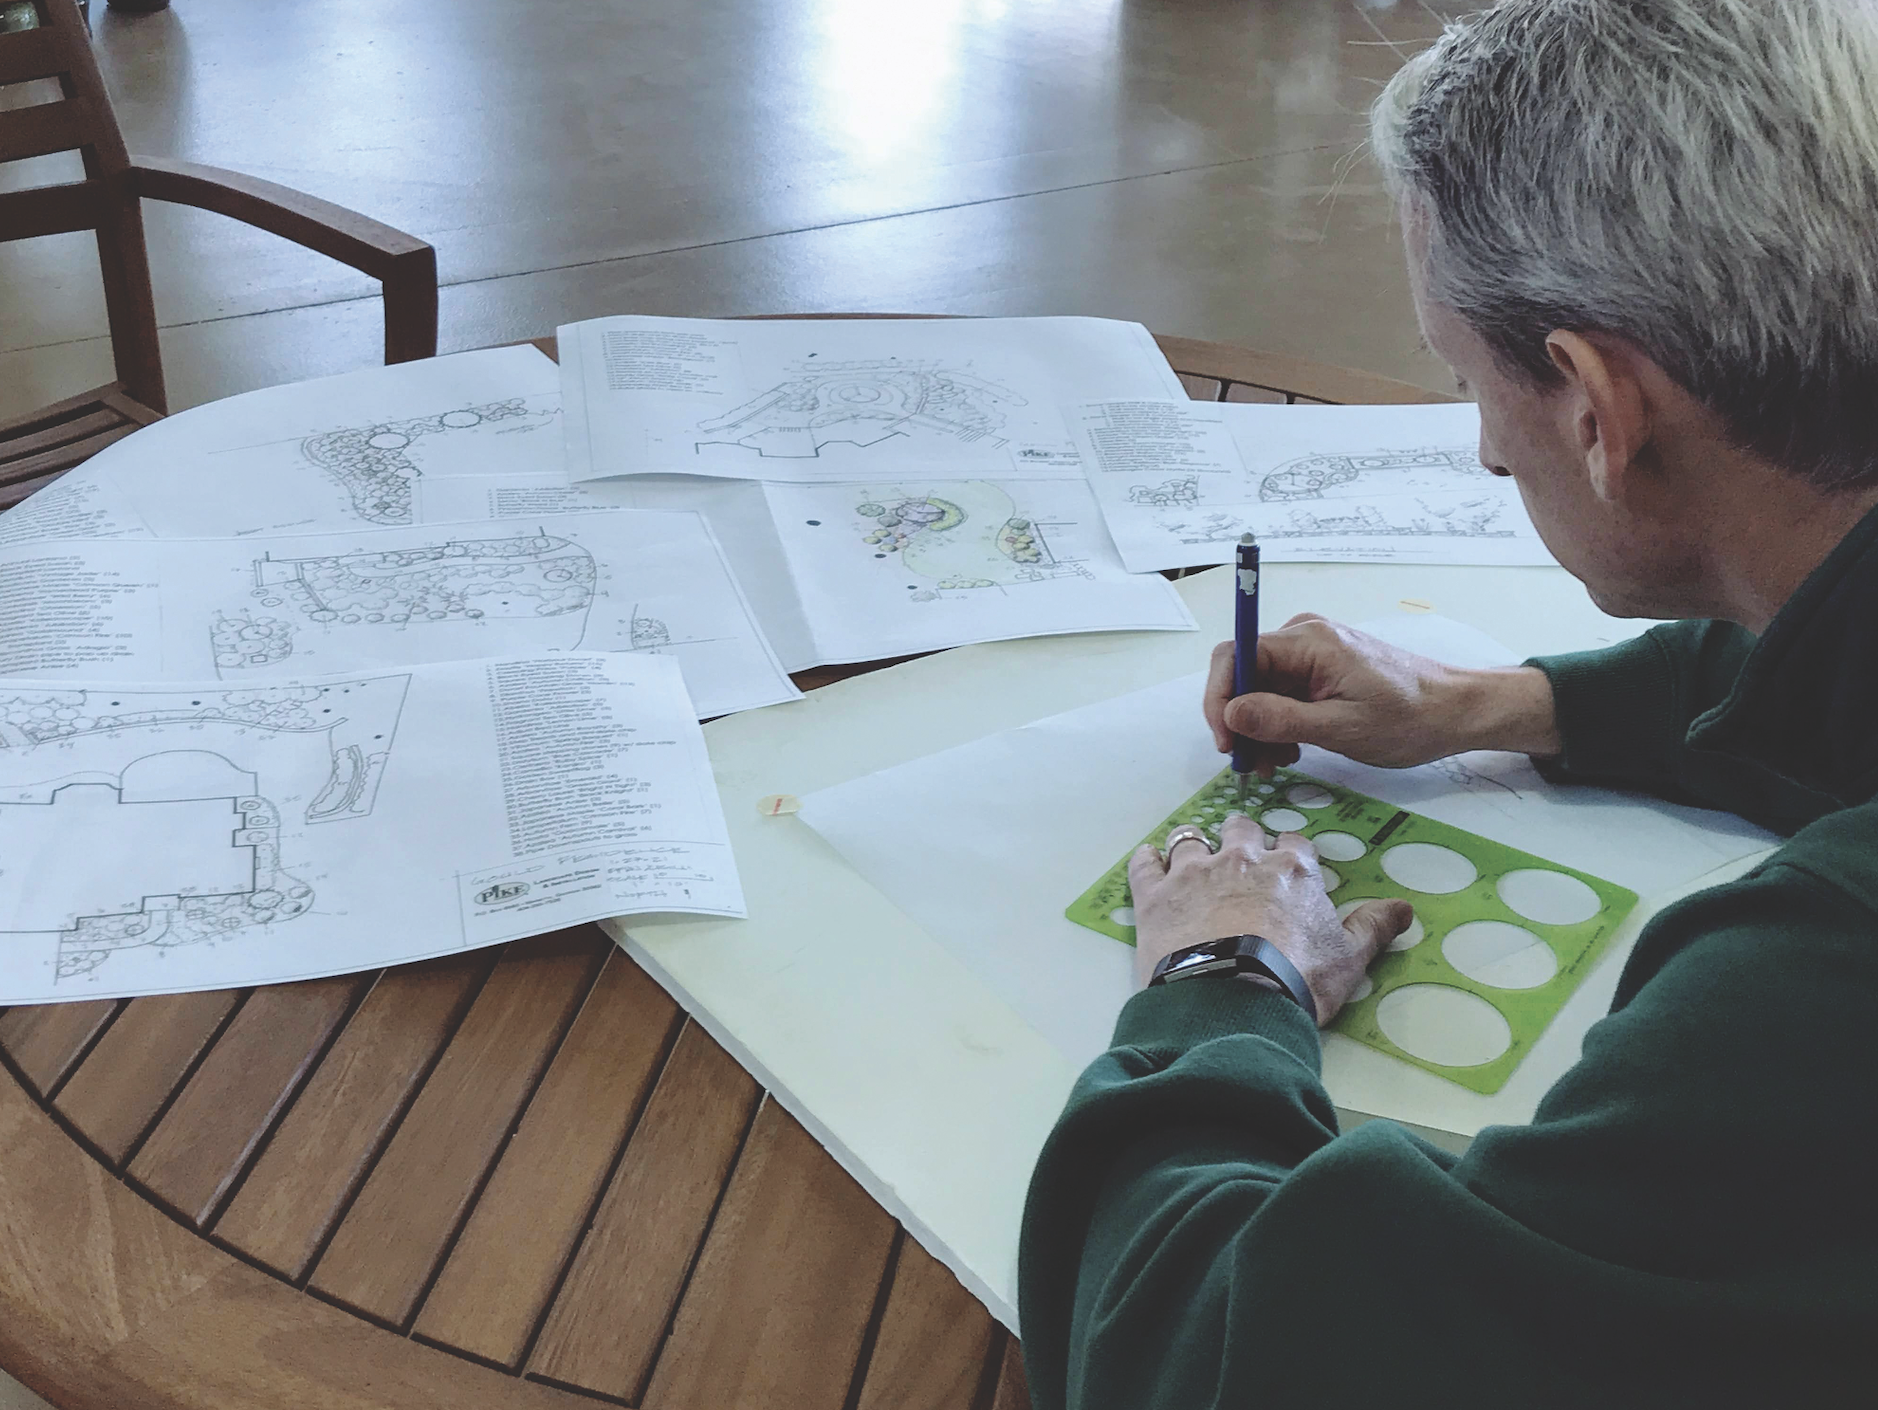 Brian Sketching Plans